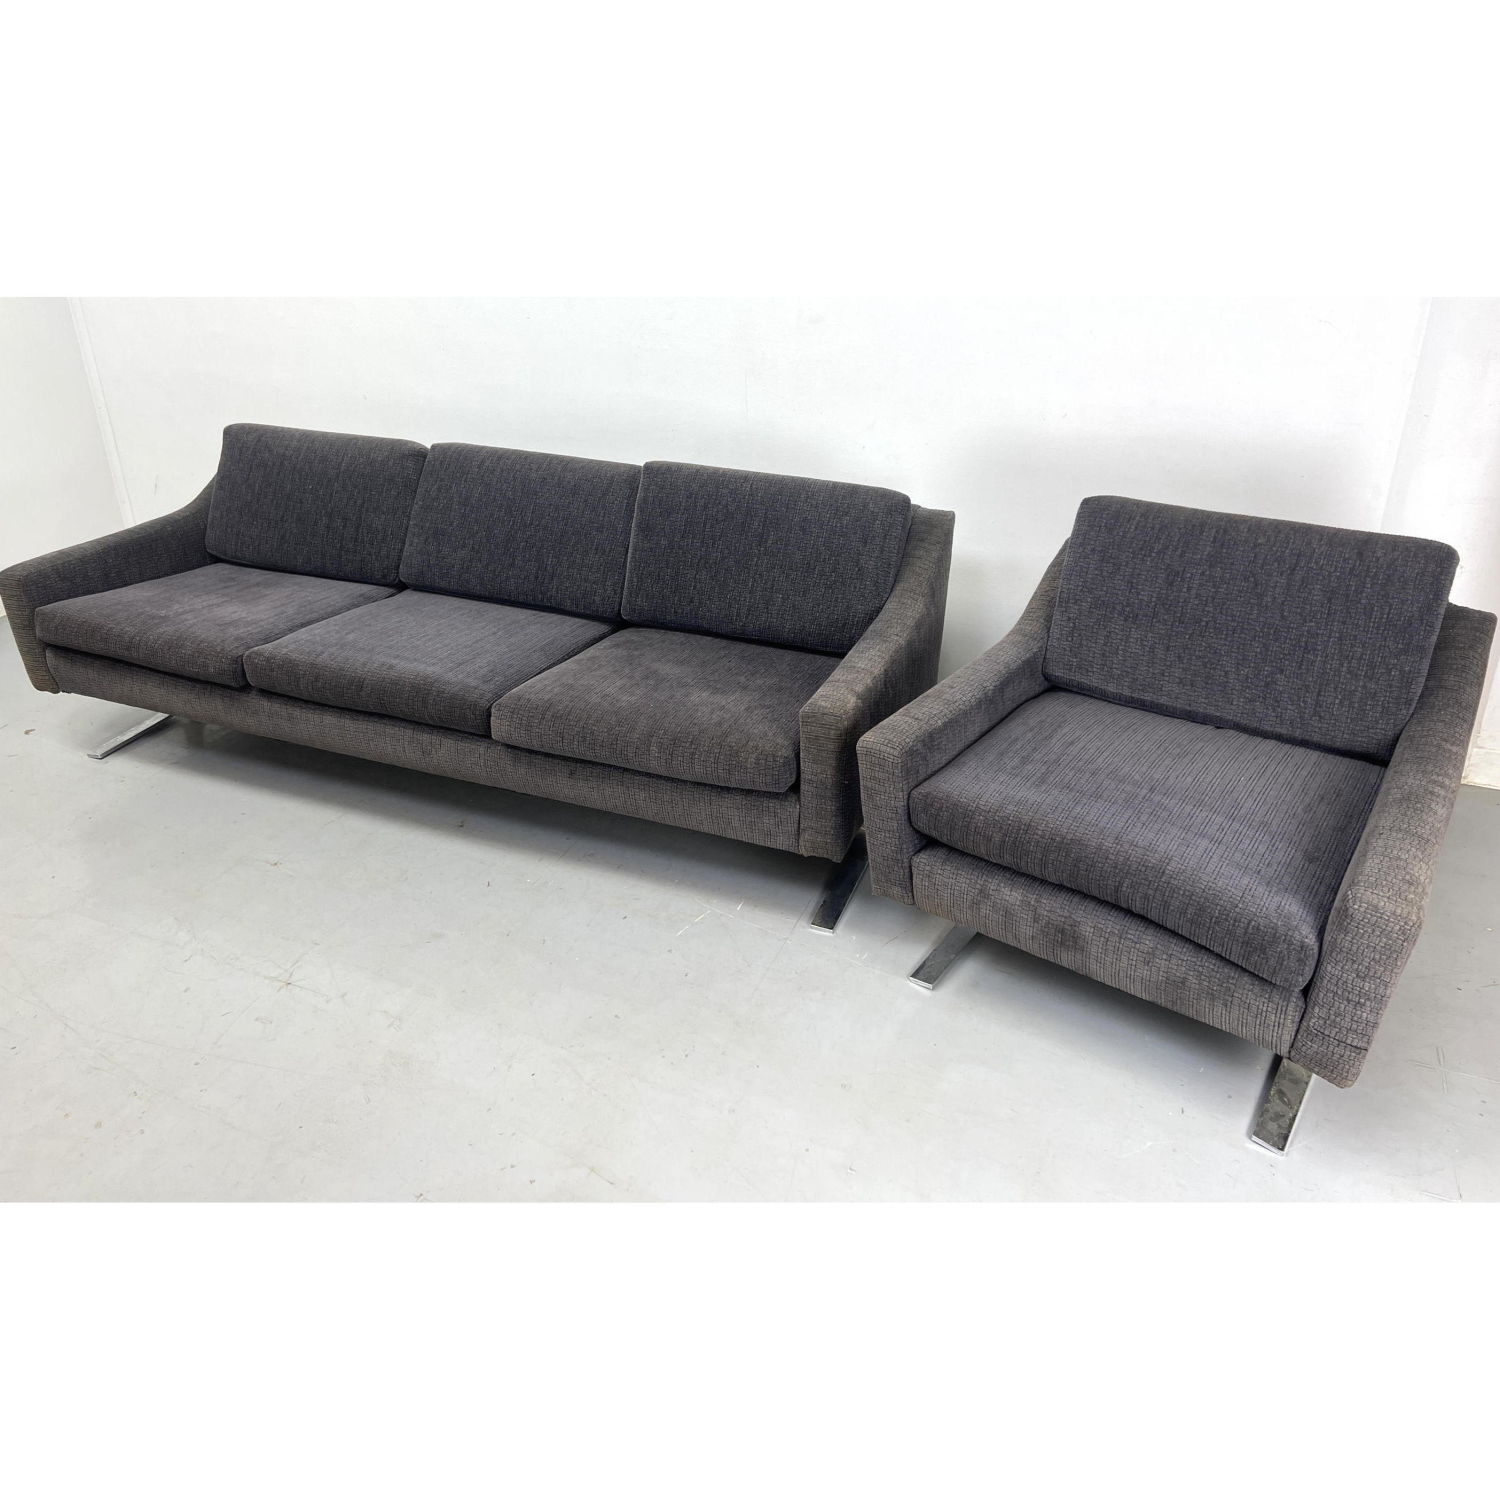 2pc Milo Baughman style Sofa, Lounge